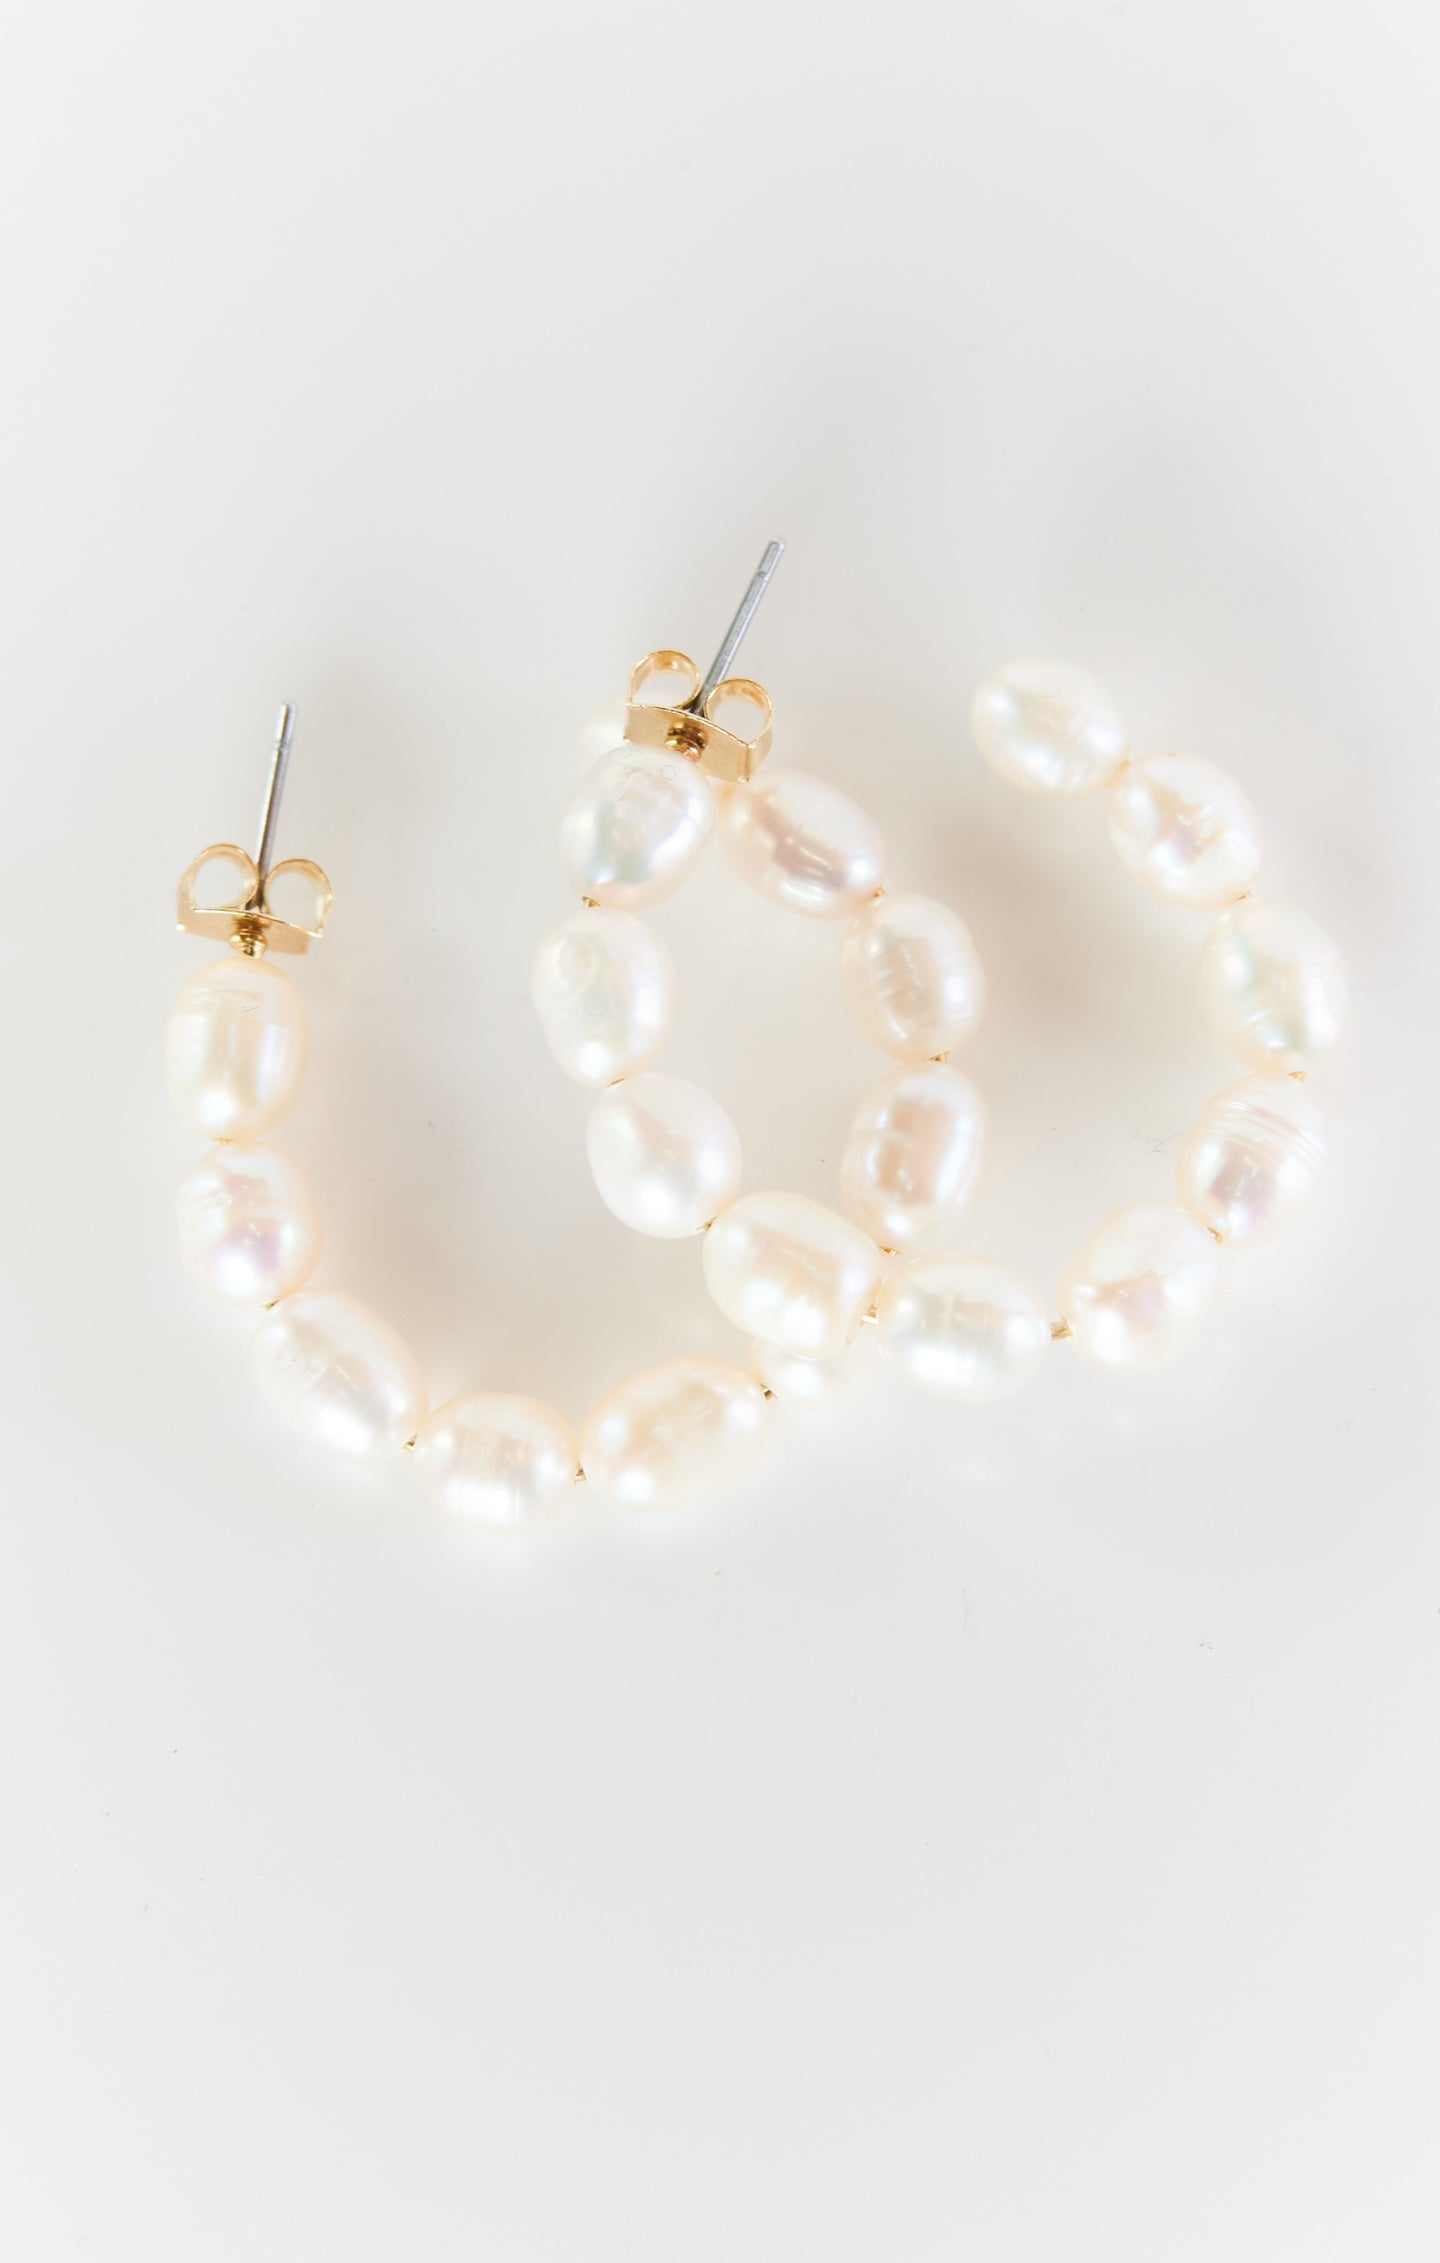 Alv Jewels Penny Pearl Hoop Earrings, in Ivory | Show Me Your Mumu